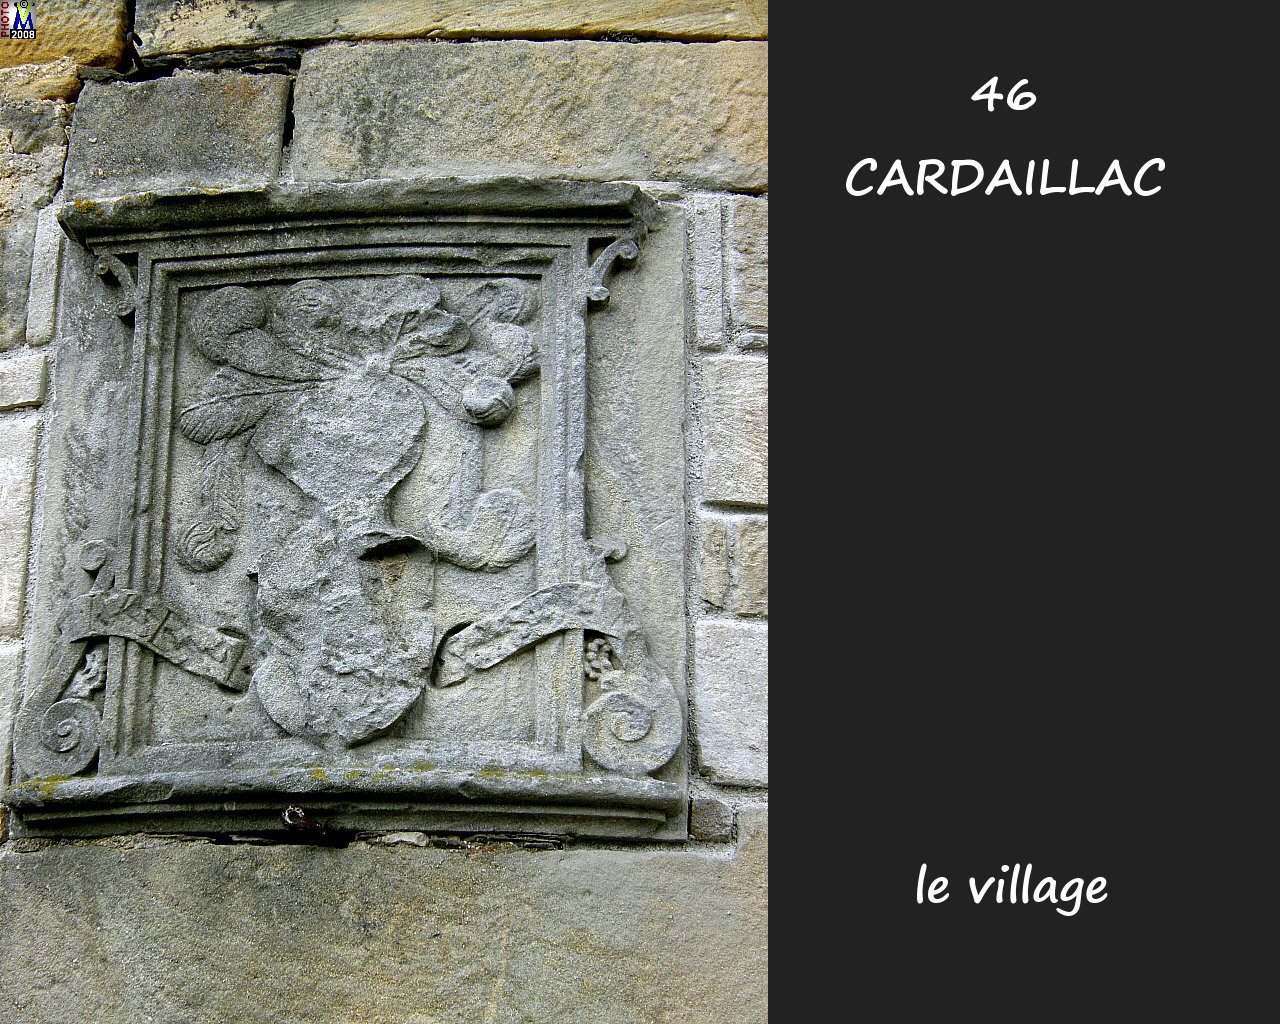 46CARDAILLAC_village_112.jpg